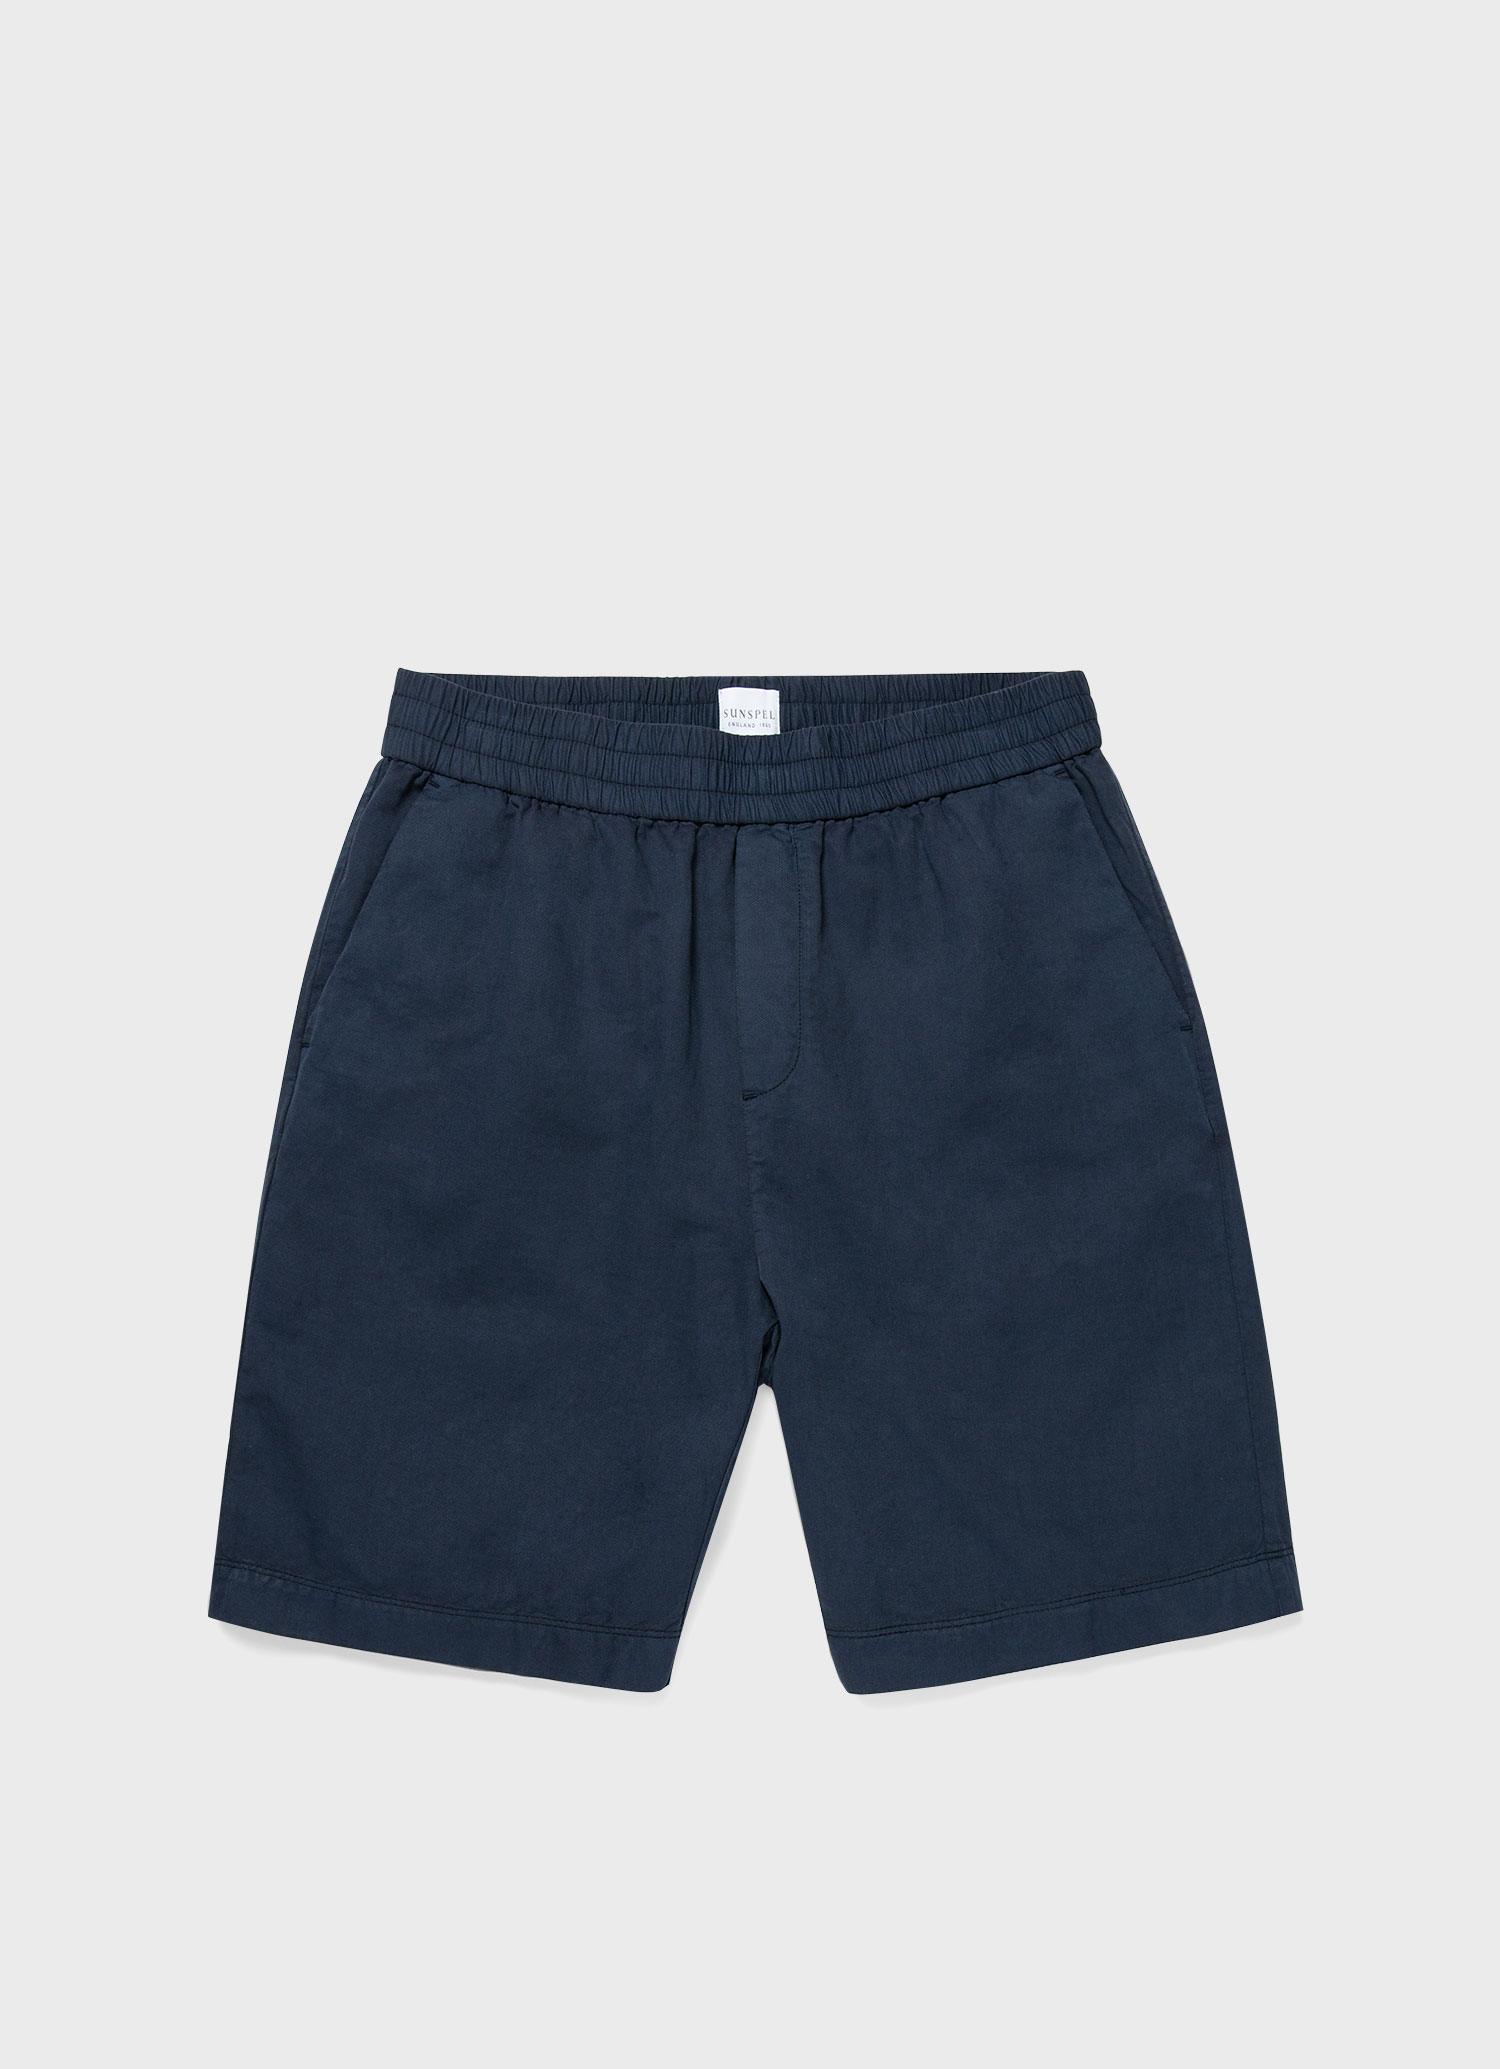 Men's Linen Shorts Navy - Organic Cotton